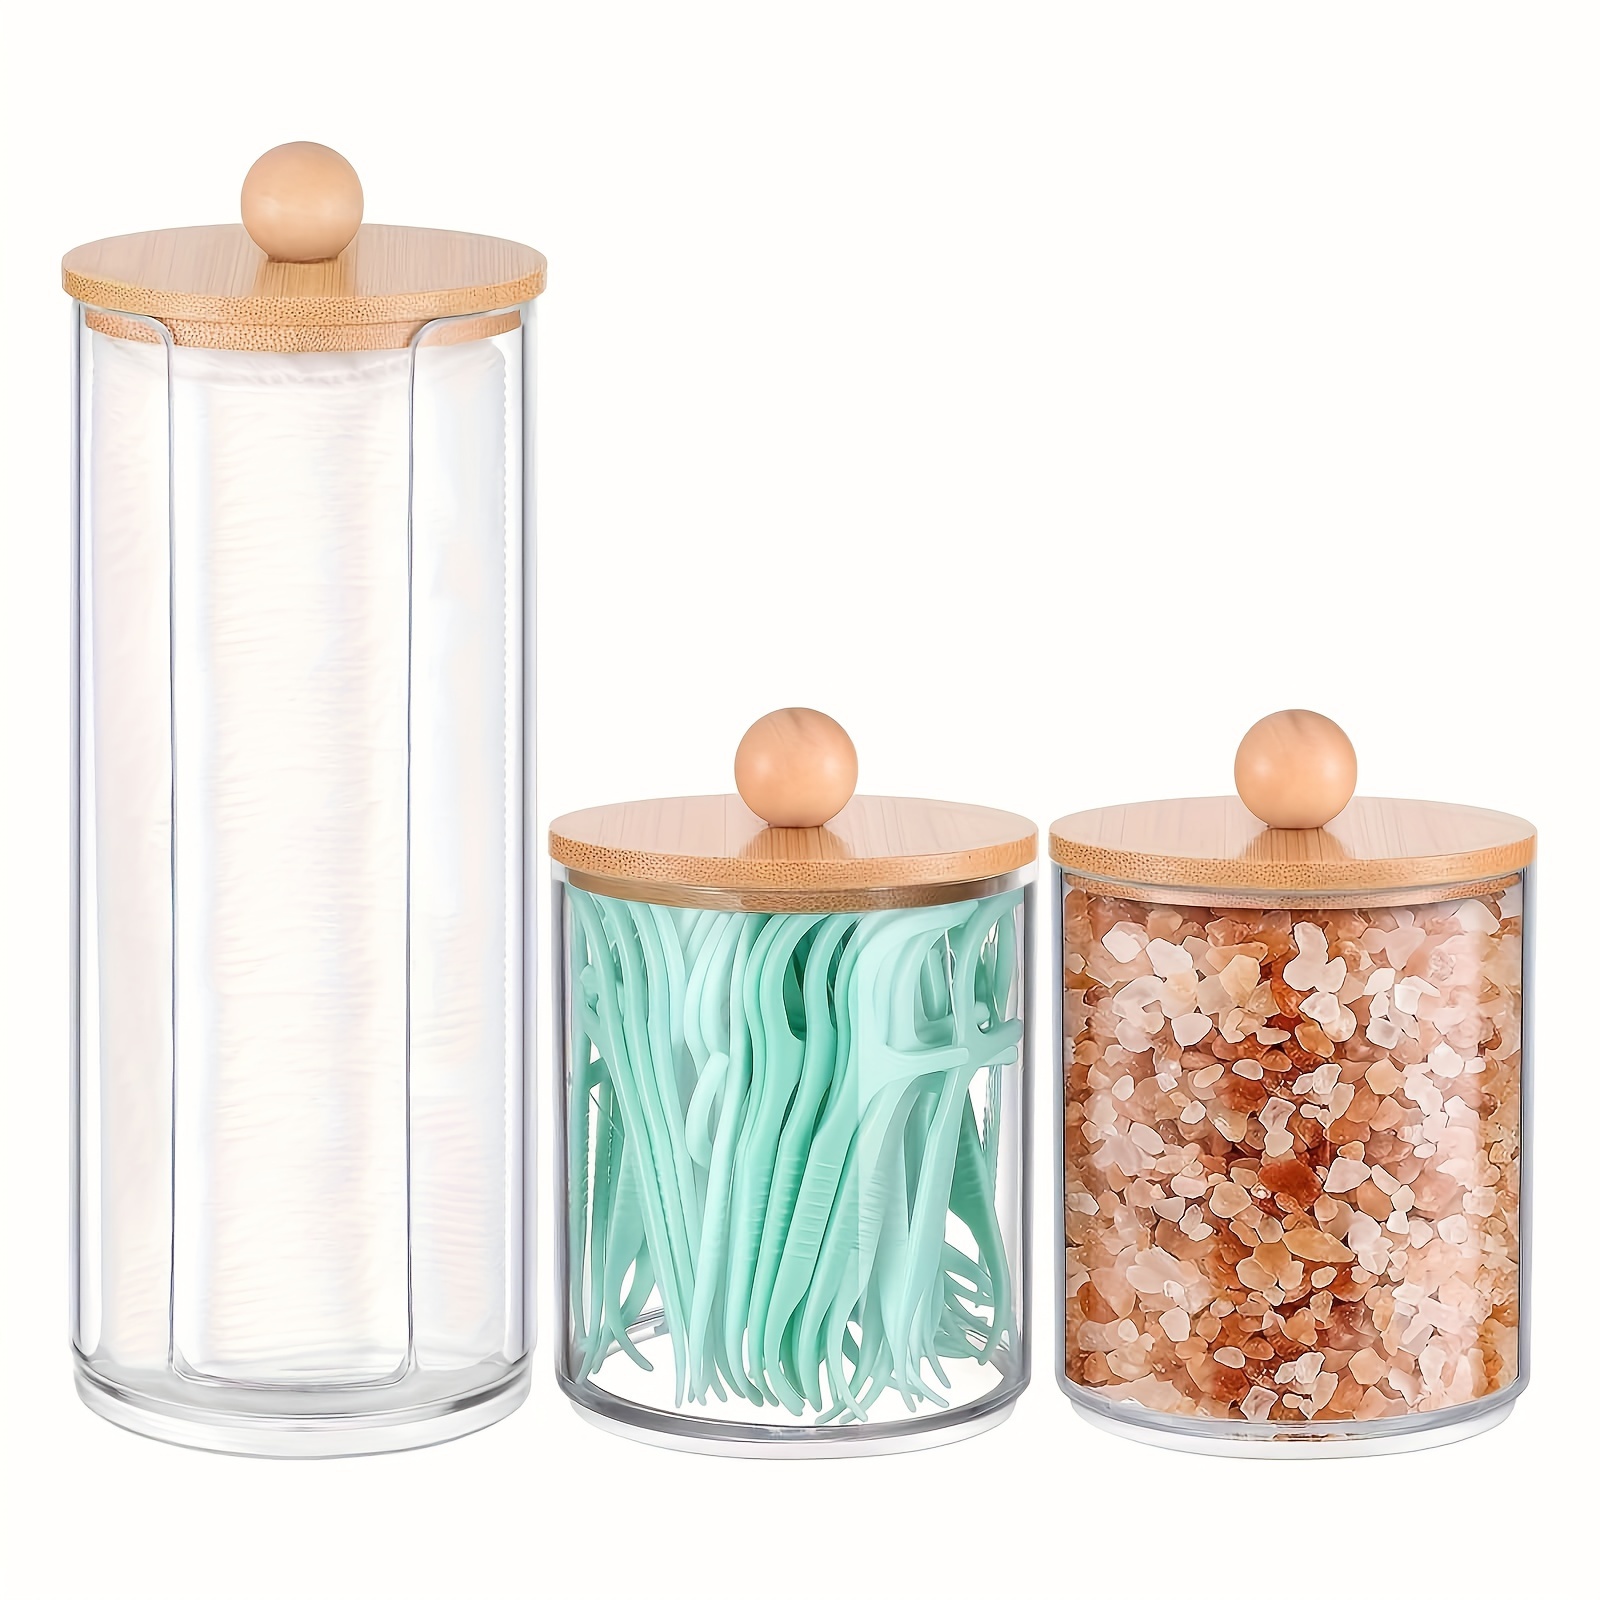 

3-piece Cotton Swab Holder Set With Bamboo Lids - Clear Bathroom Dispenser For Cotton Balls, Swabs, Pads & Floss Sticks - Home Organization Essentials